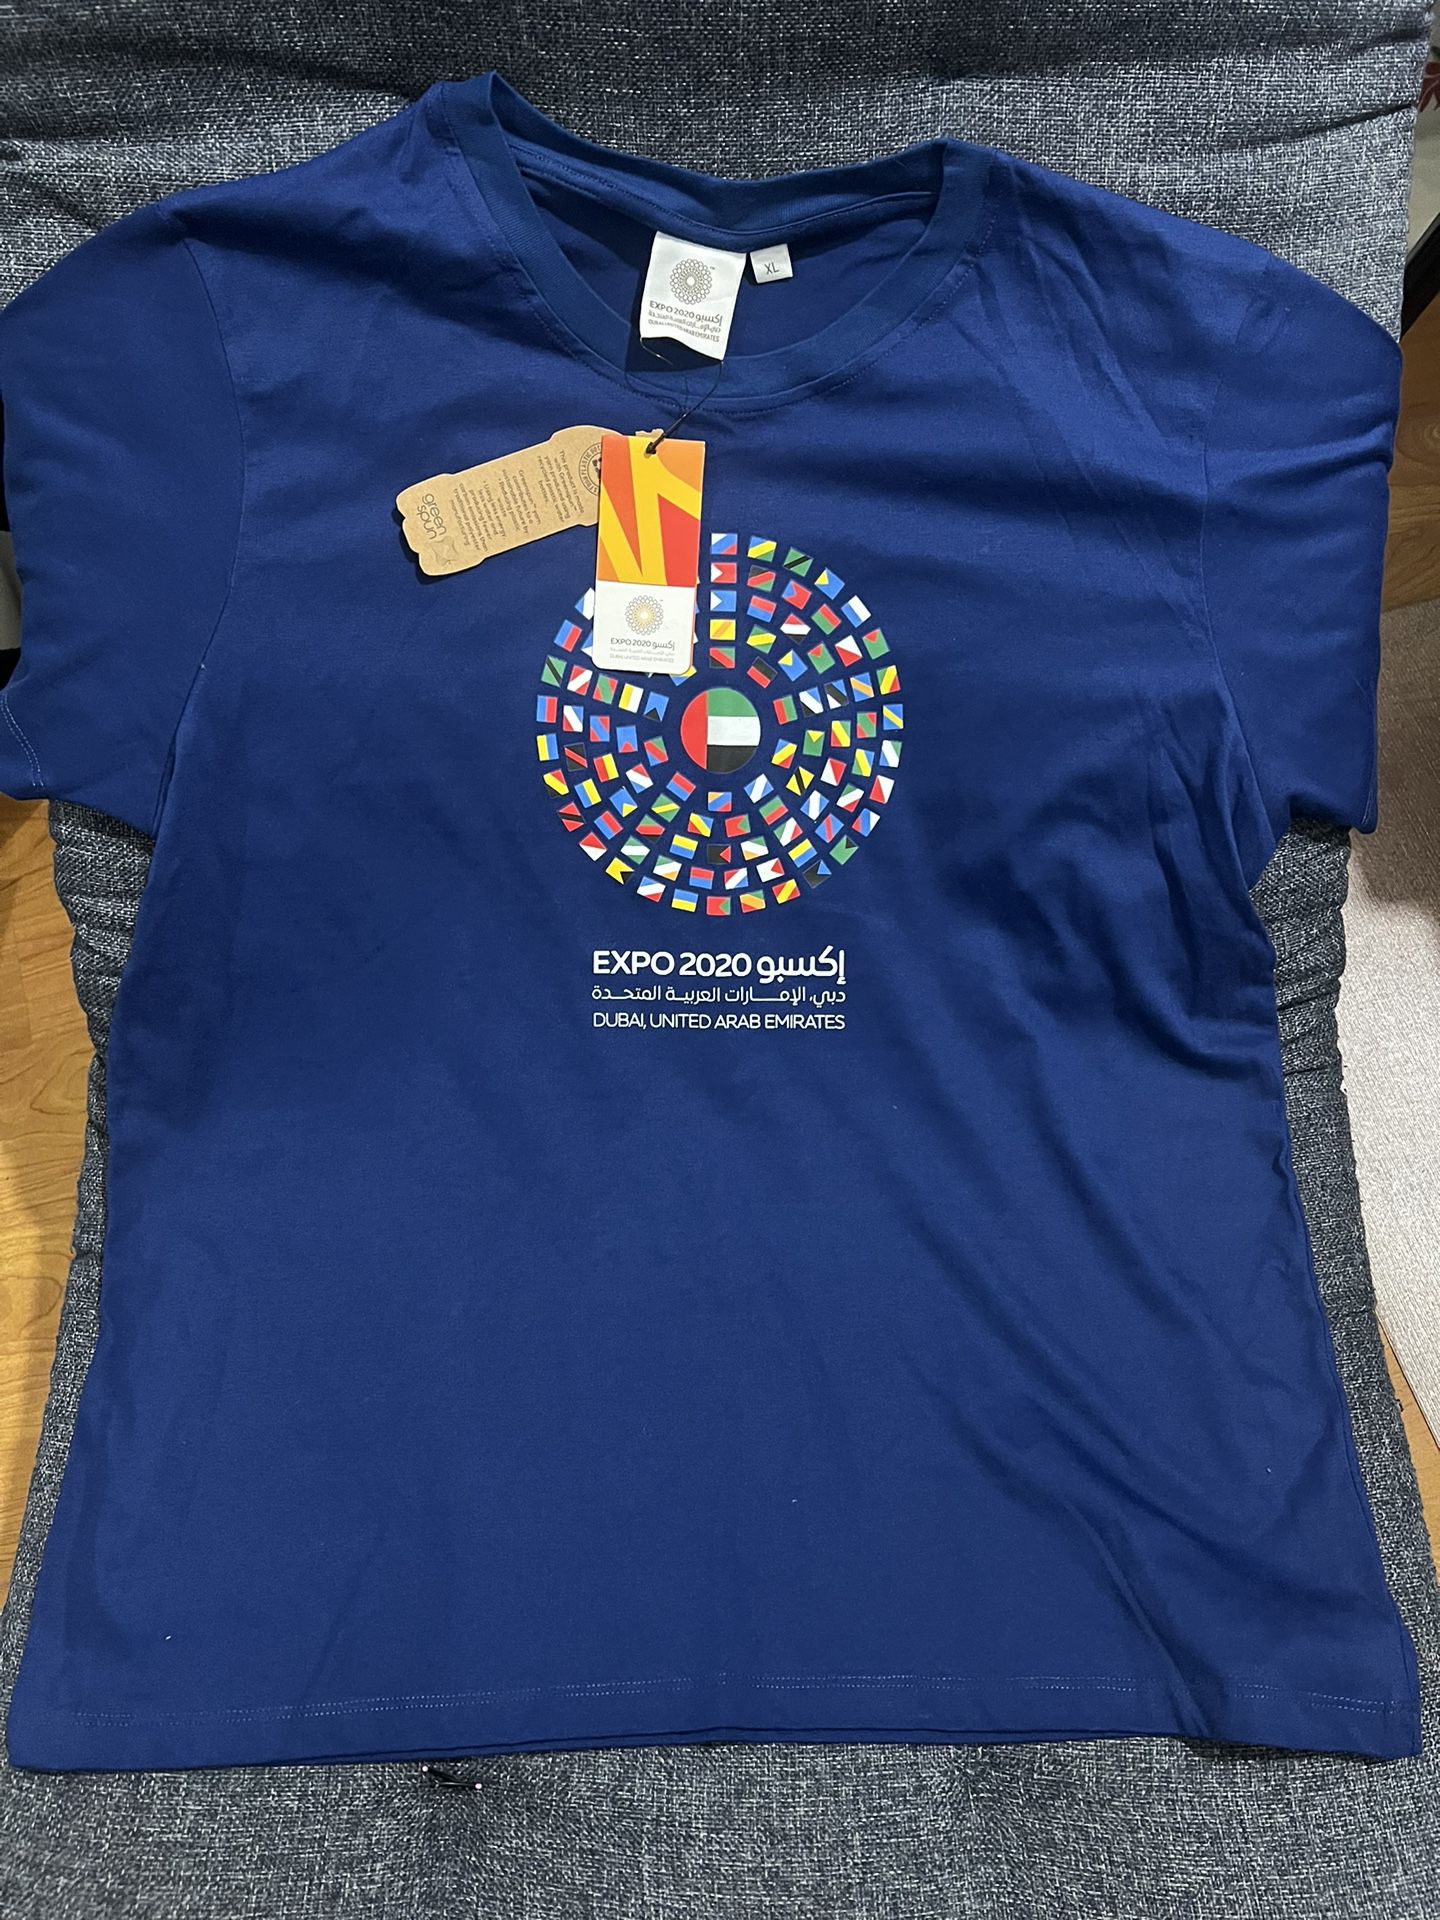 Dubai Expo 2020 Shirt